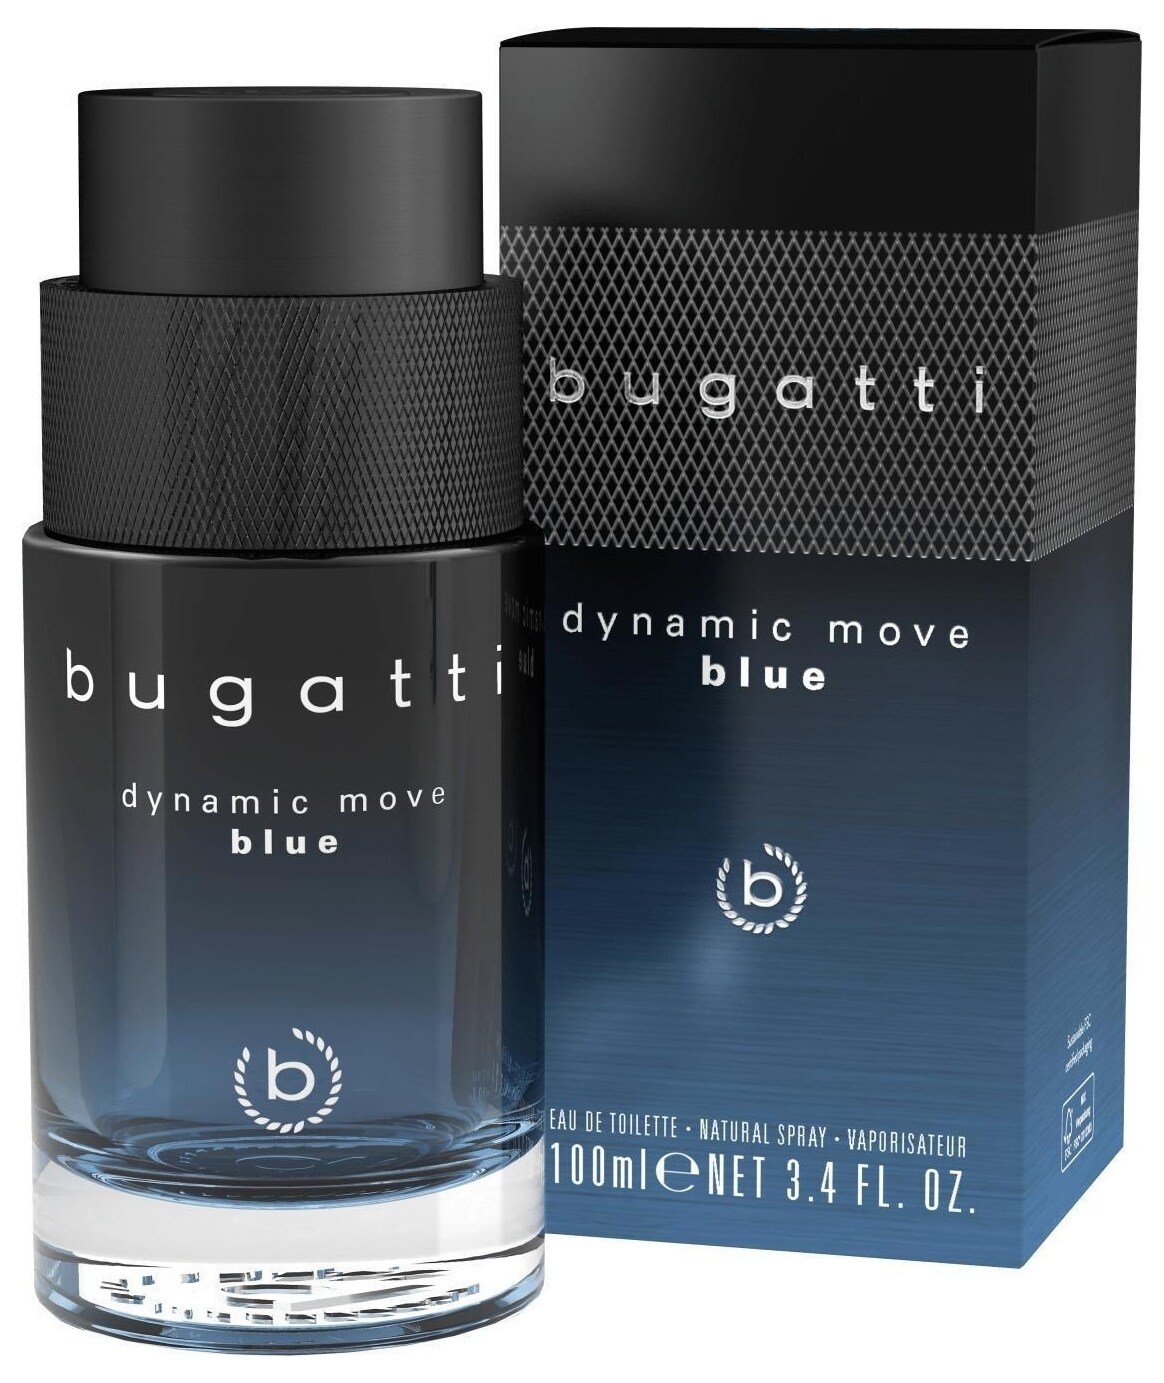 Dynamic & Blue » Move Perfume by Facts Fashion bugatti Reviews